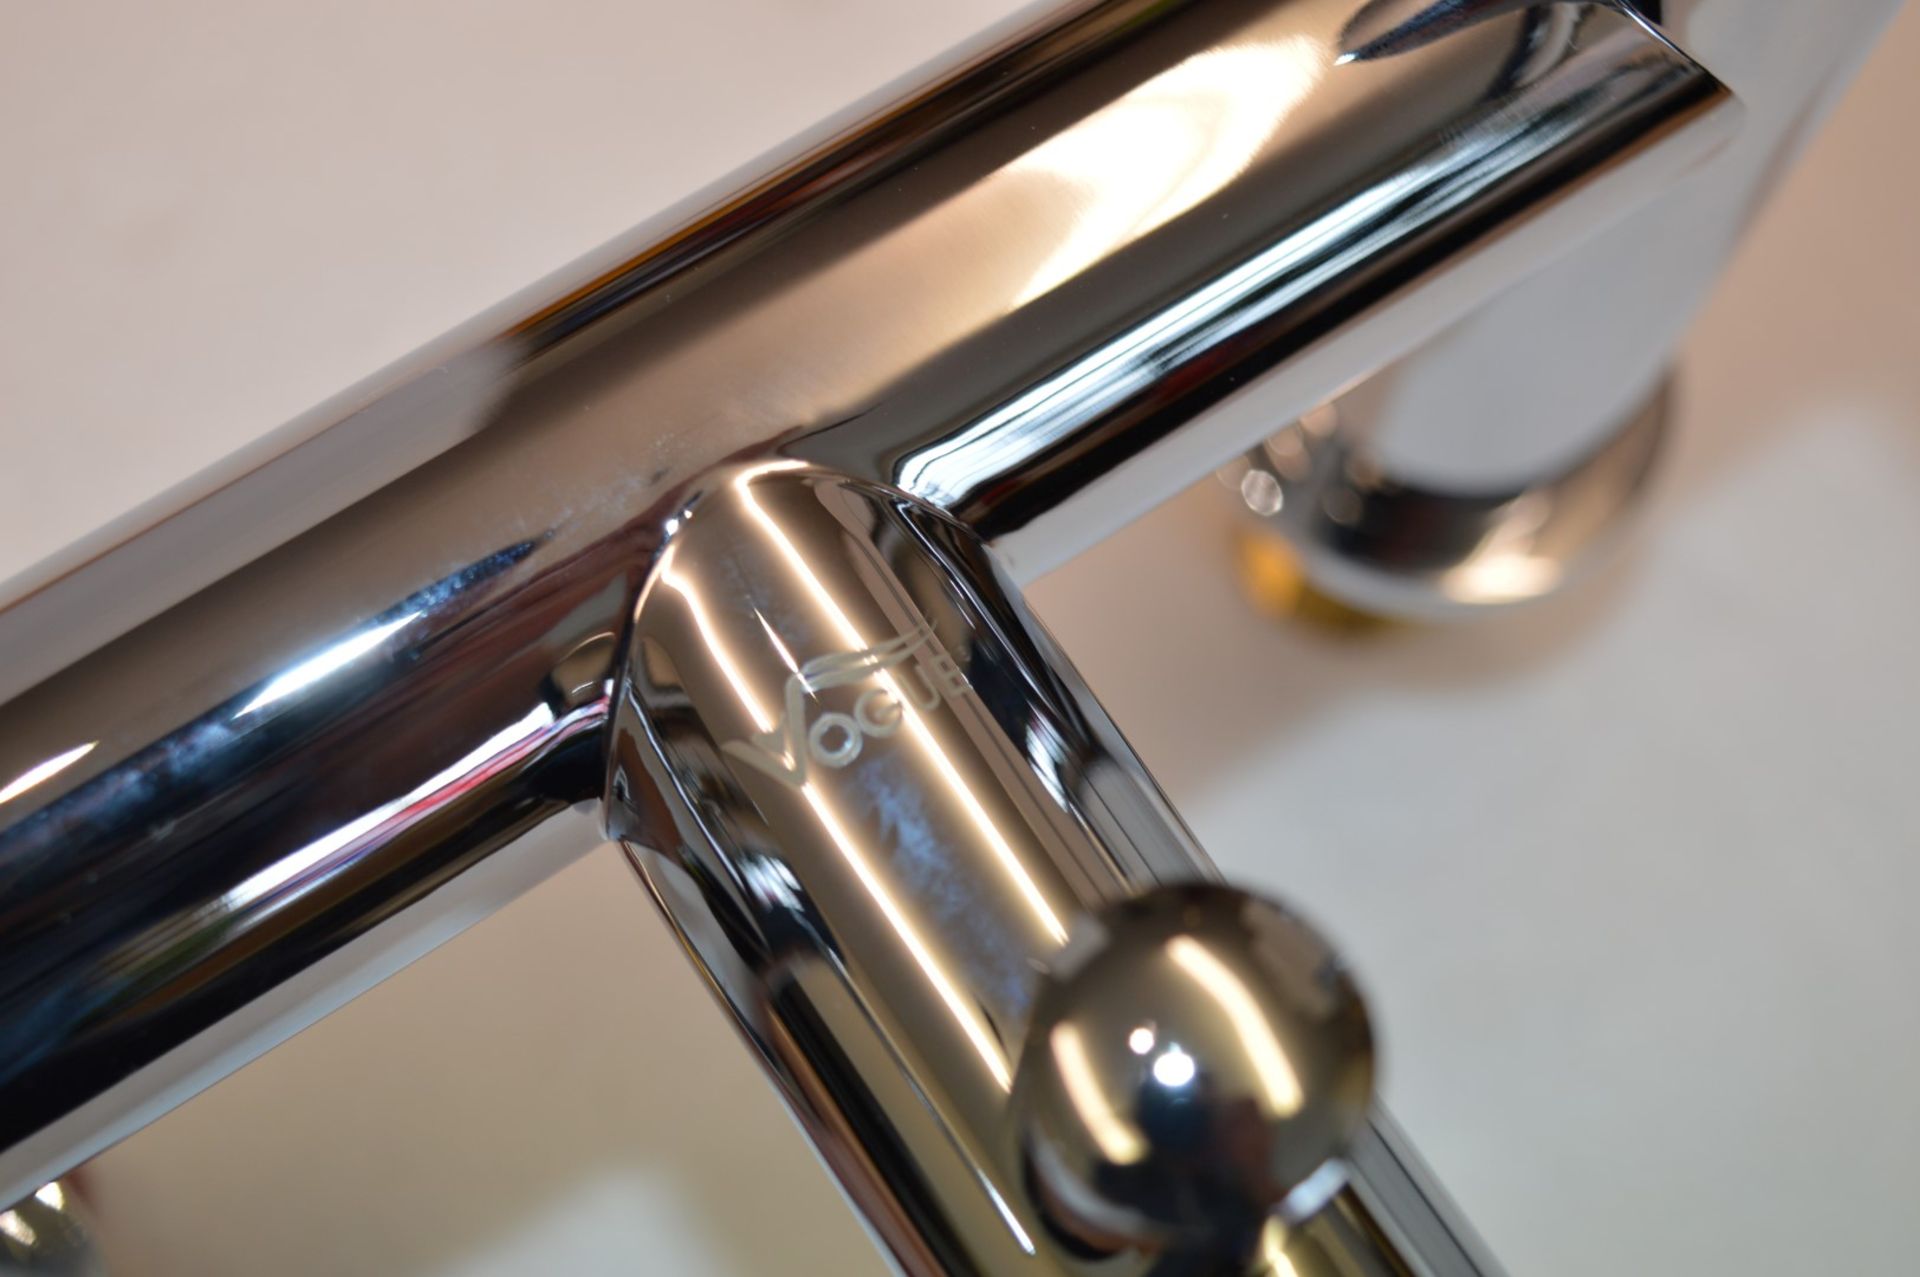 1 x Series 5 Bath Shower Mixer Tap With Handset - Vogue Bathrooms Platinum Brassware Collection - - Image 7 of 9